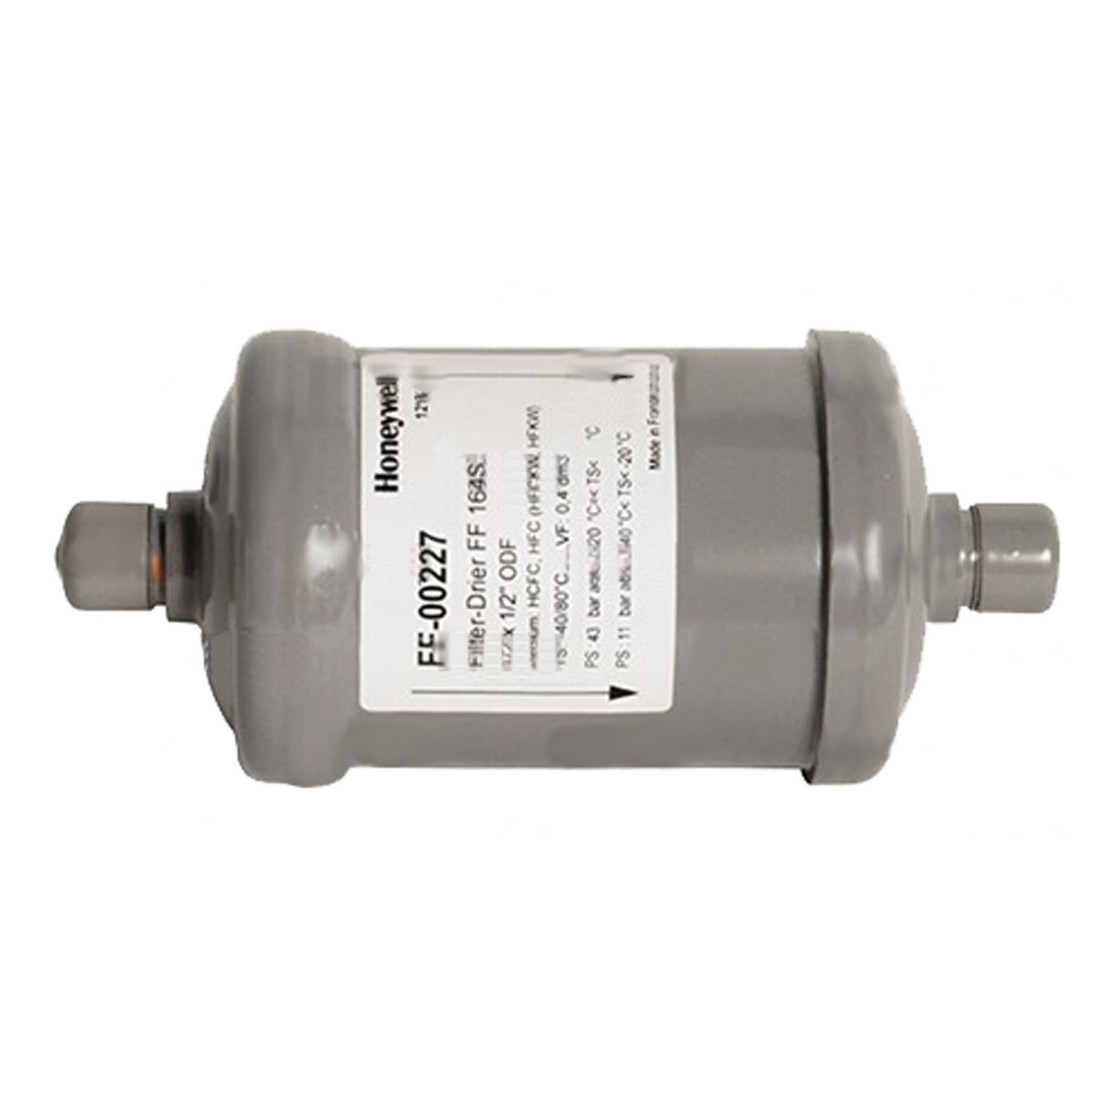 Sporlan C-164-s Filter Drier 1/2 ODF Solder Ac4 for sale online 